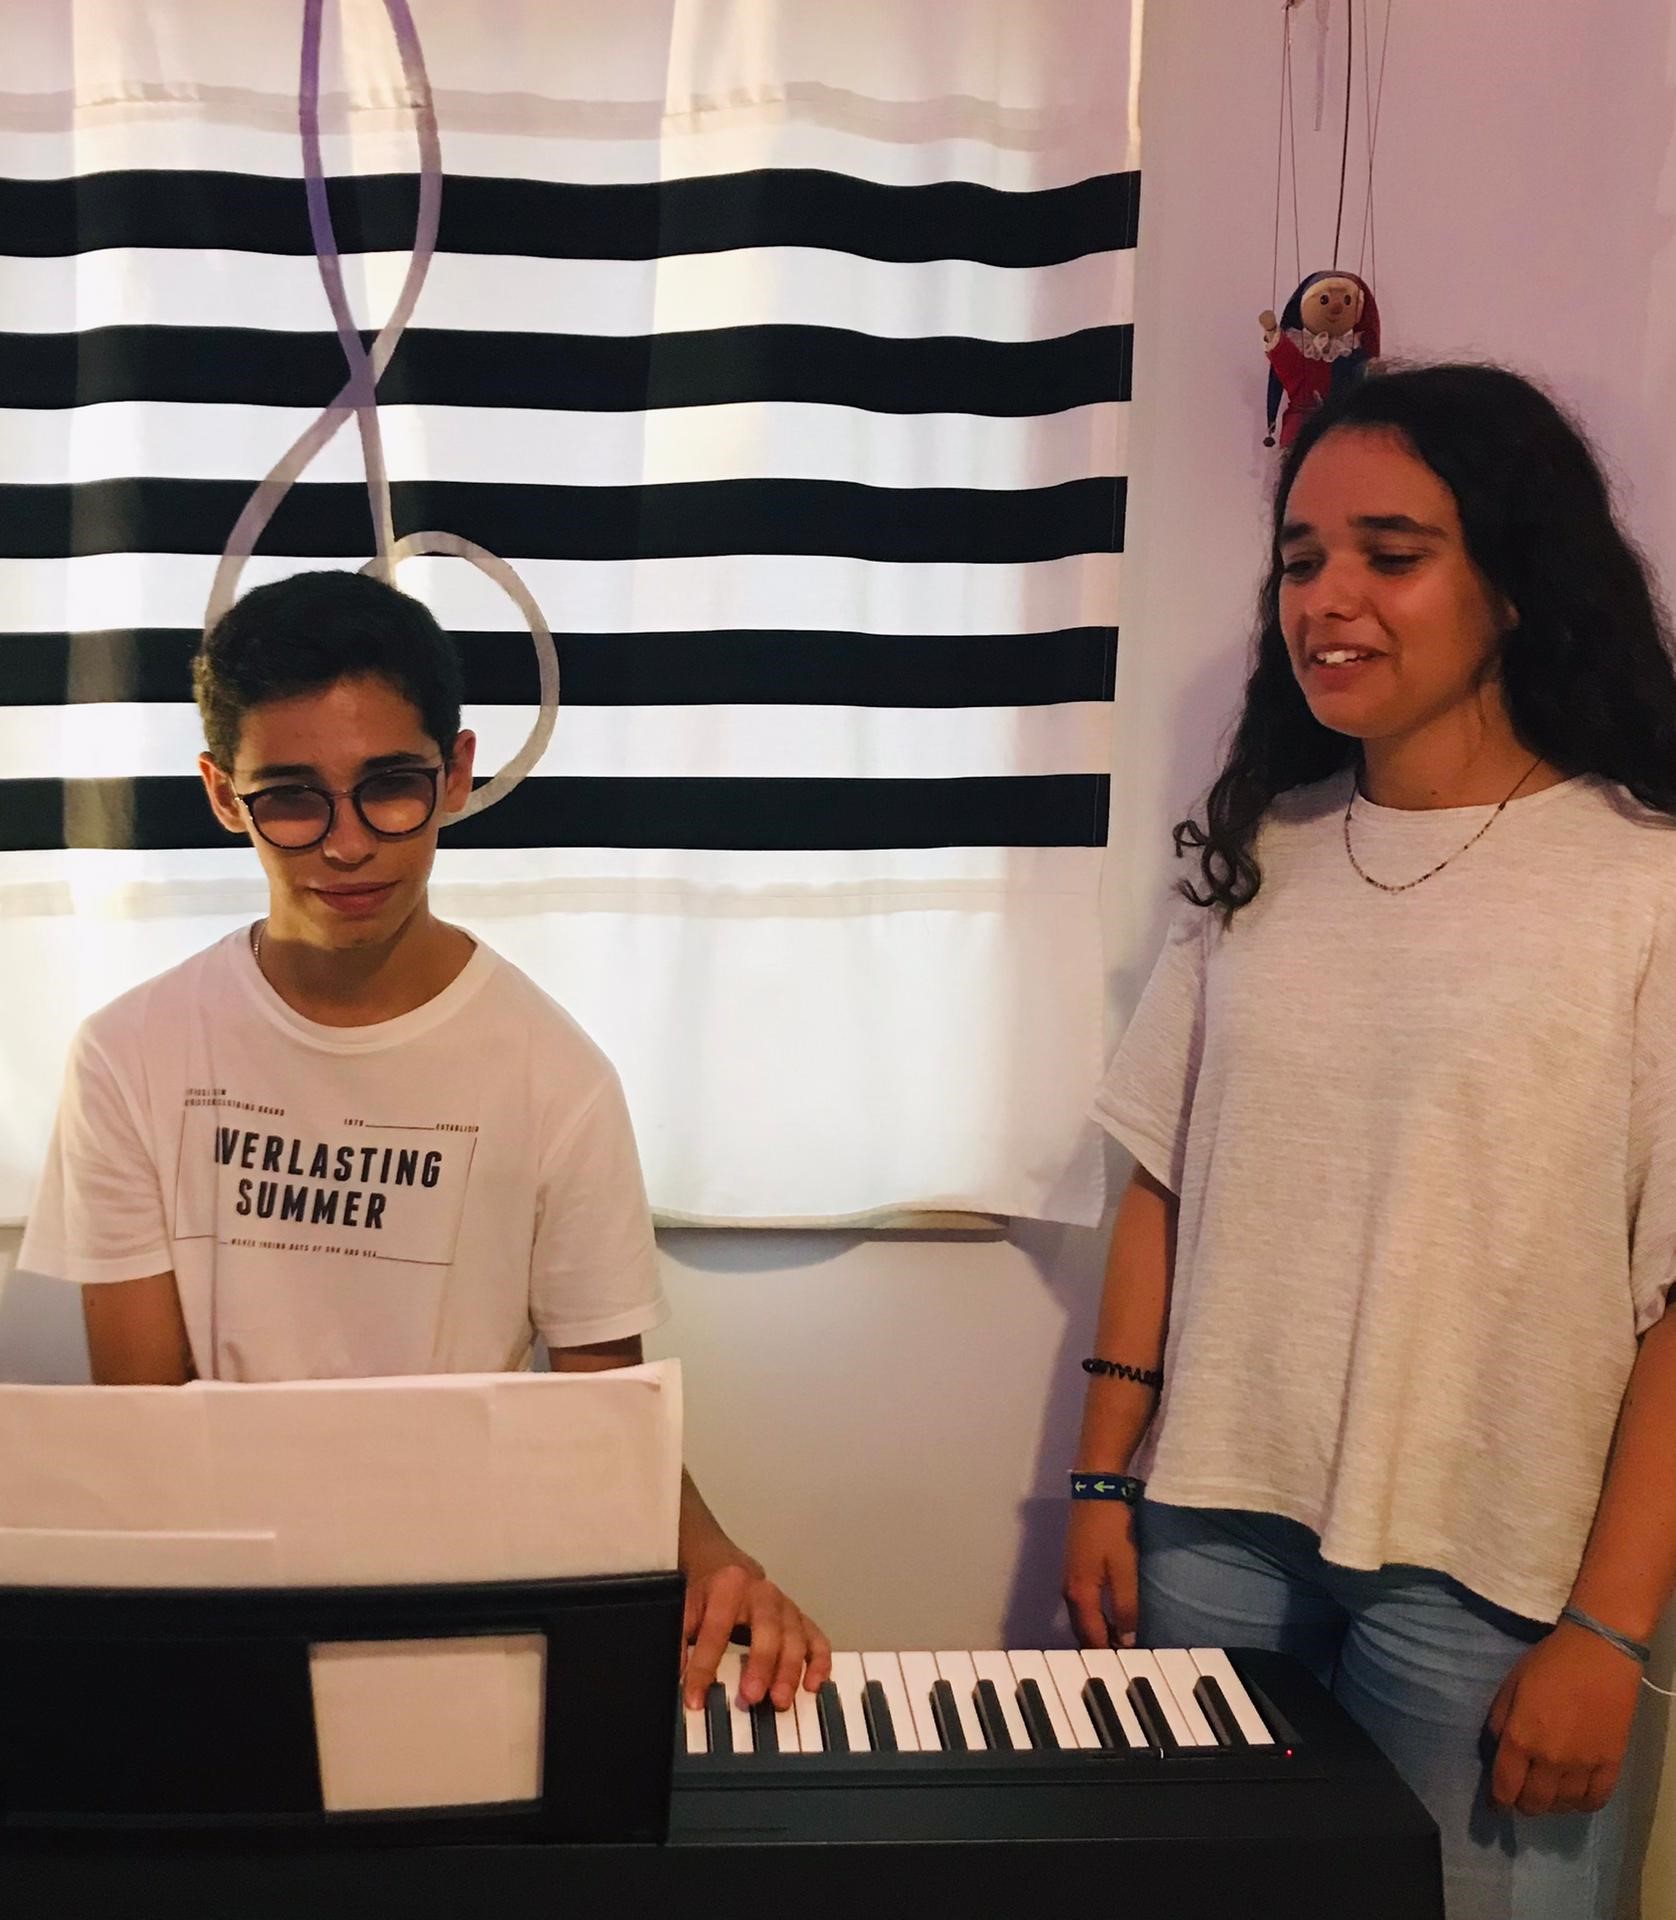 Música ao vivo na voz de Carolina Nobre e Afonso Henriques ao piano